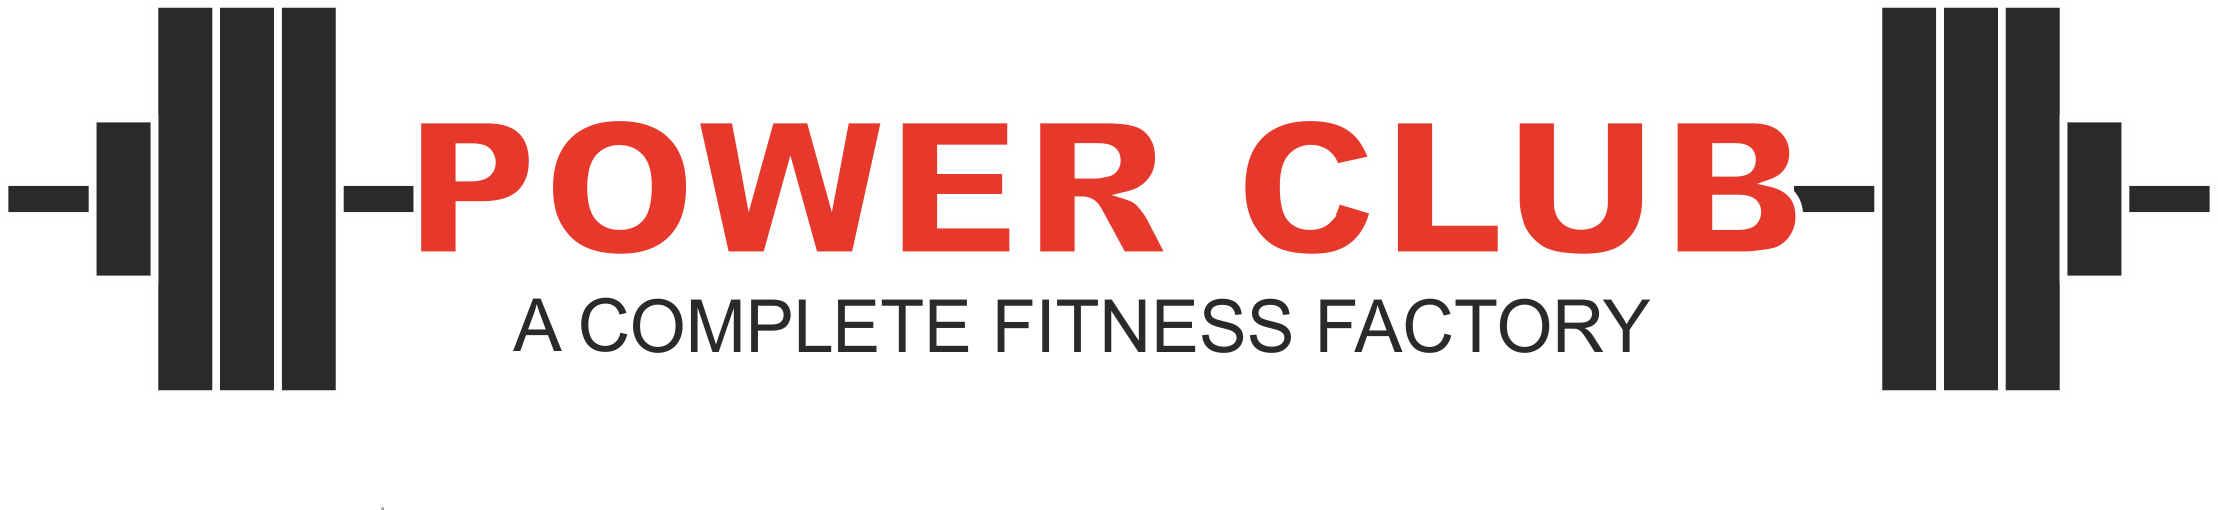 POWER CLUB Logo